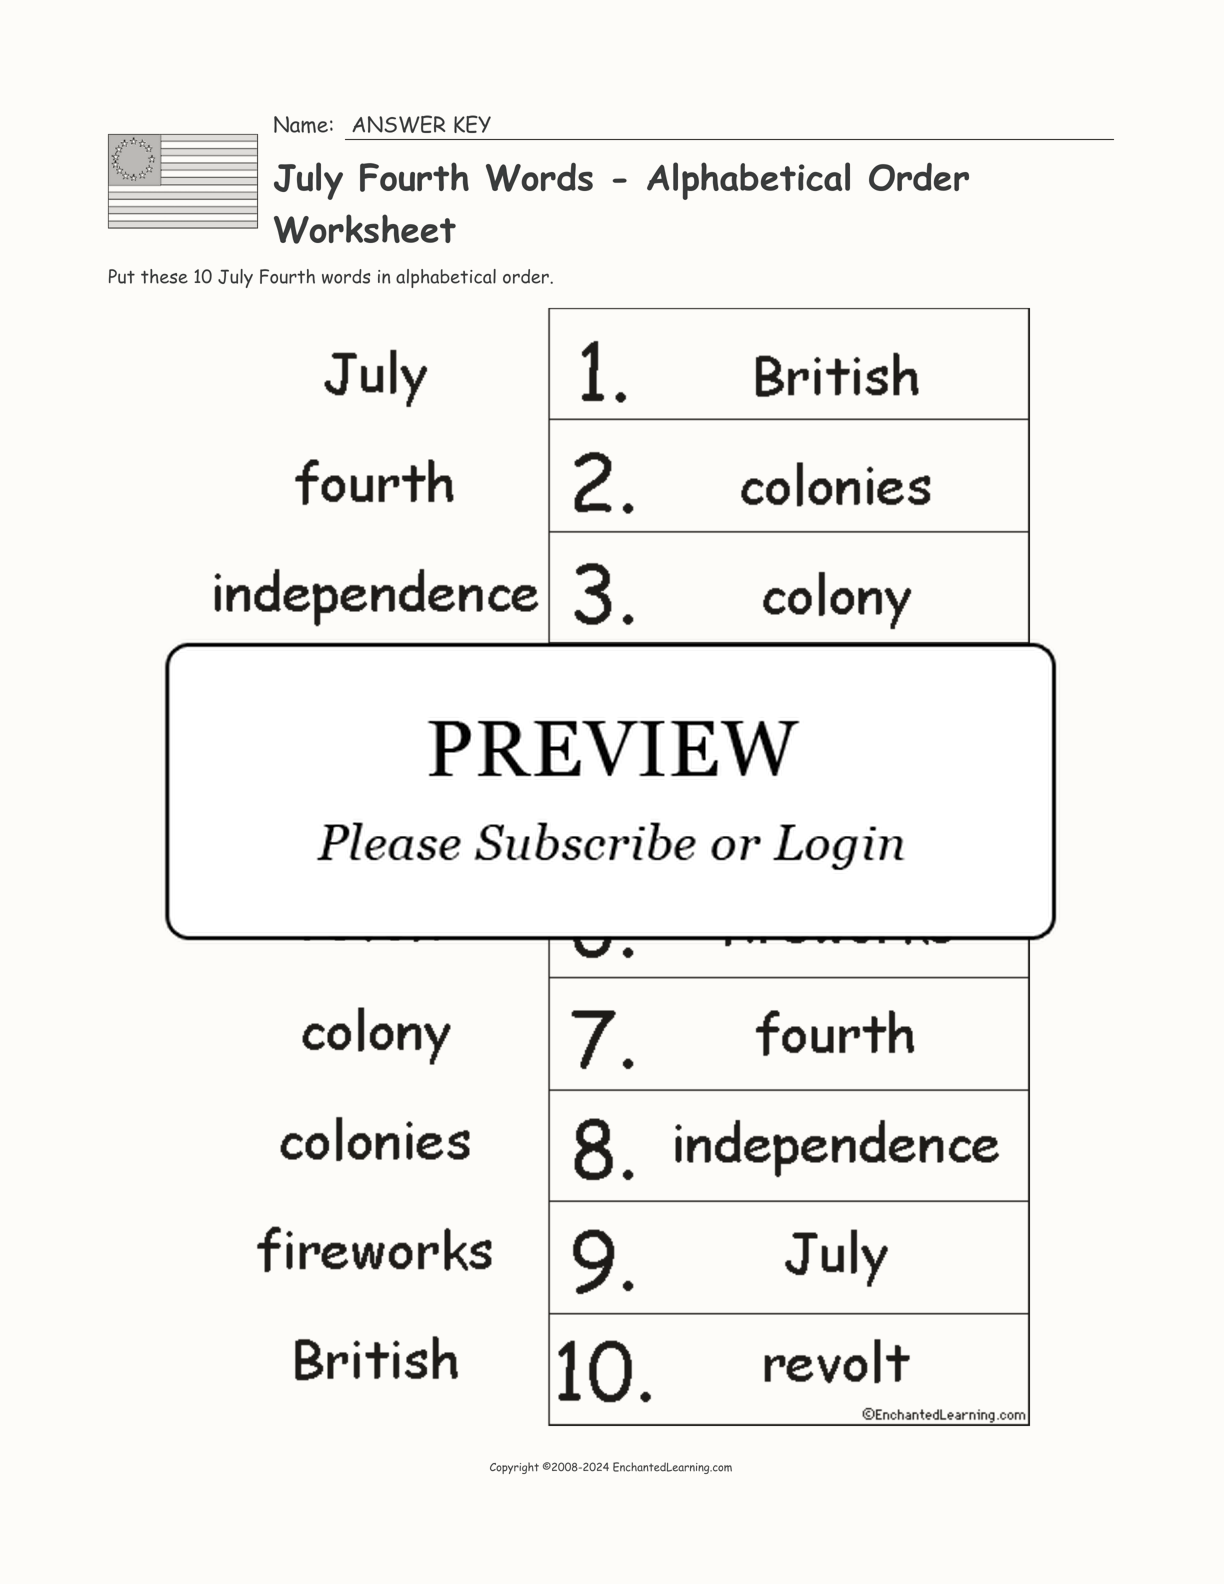 July Fourth Words - Alphabetical Order Worksheet interactive worksheet page 2